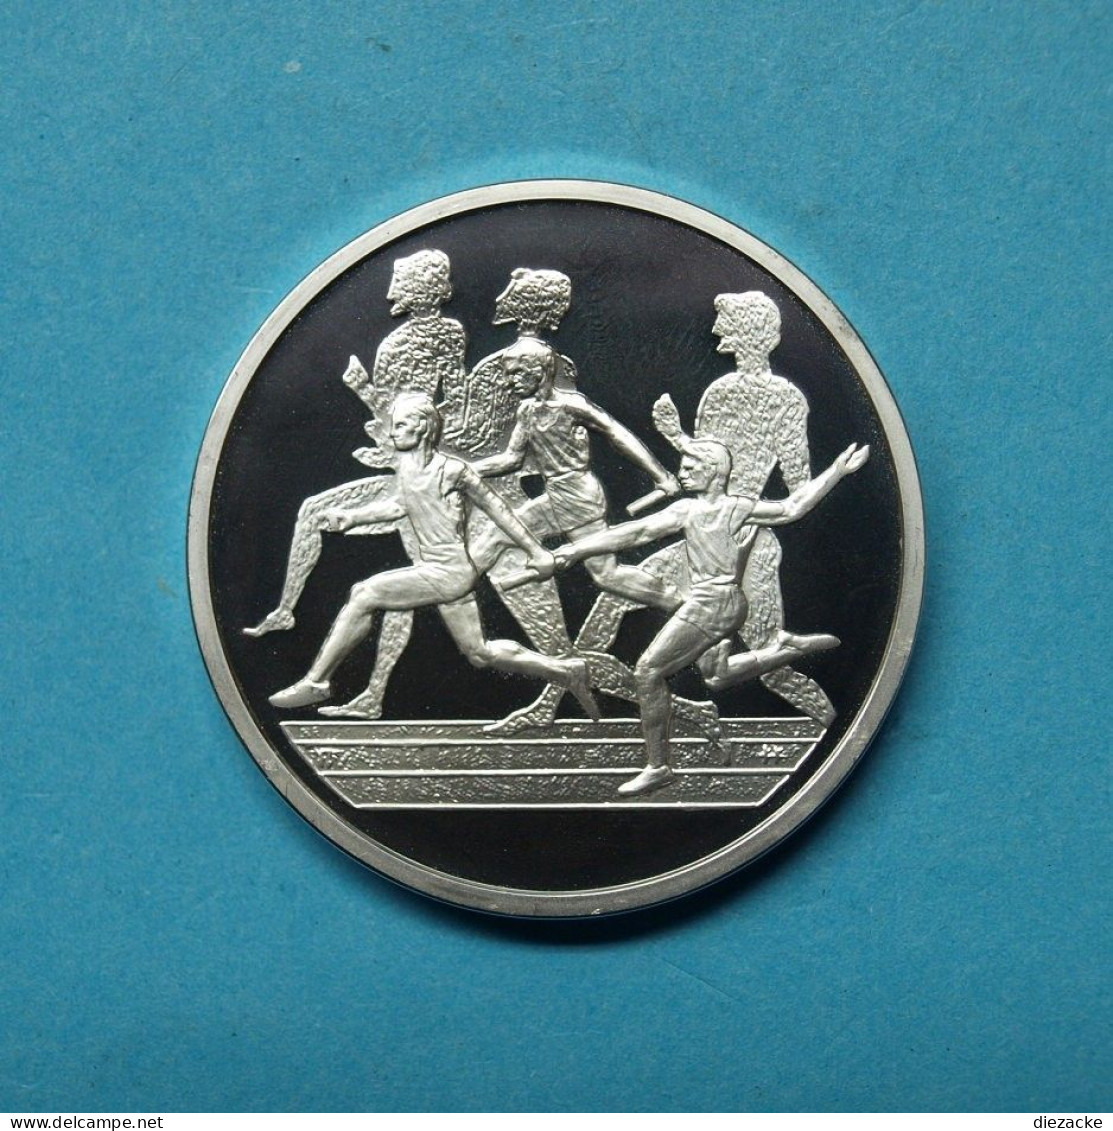 Griechenland 2004 10 Euro Olympiade Athen Laufen 925er Silber PP (M4201 - Griechenland